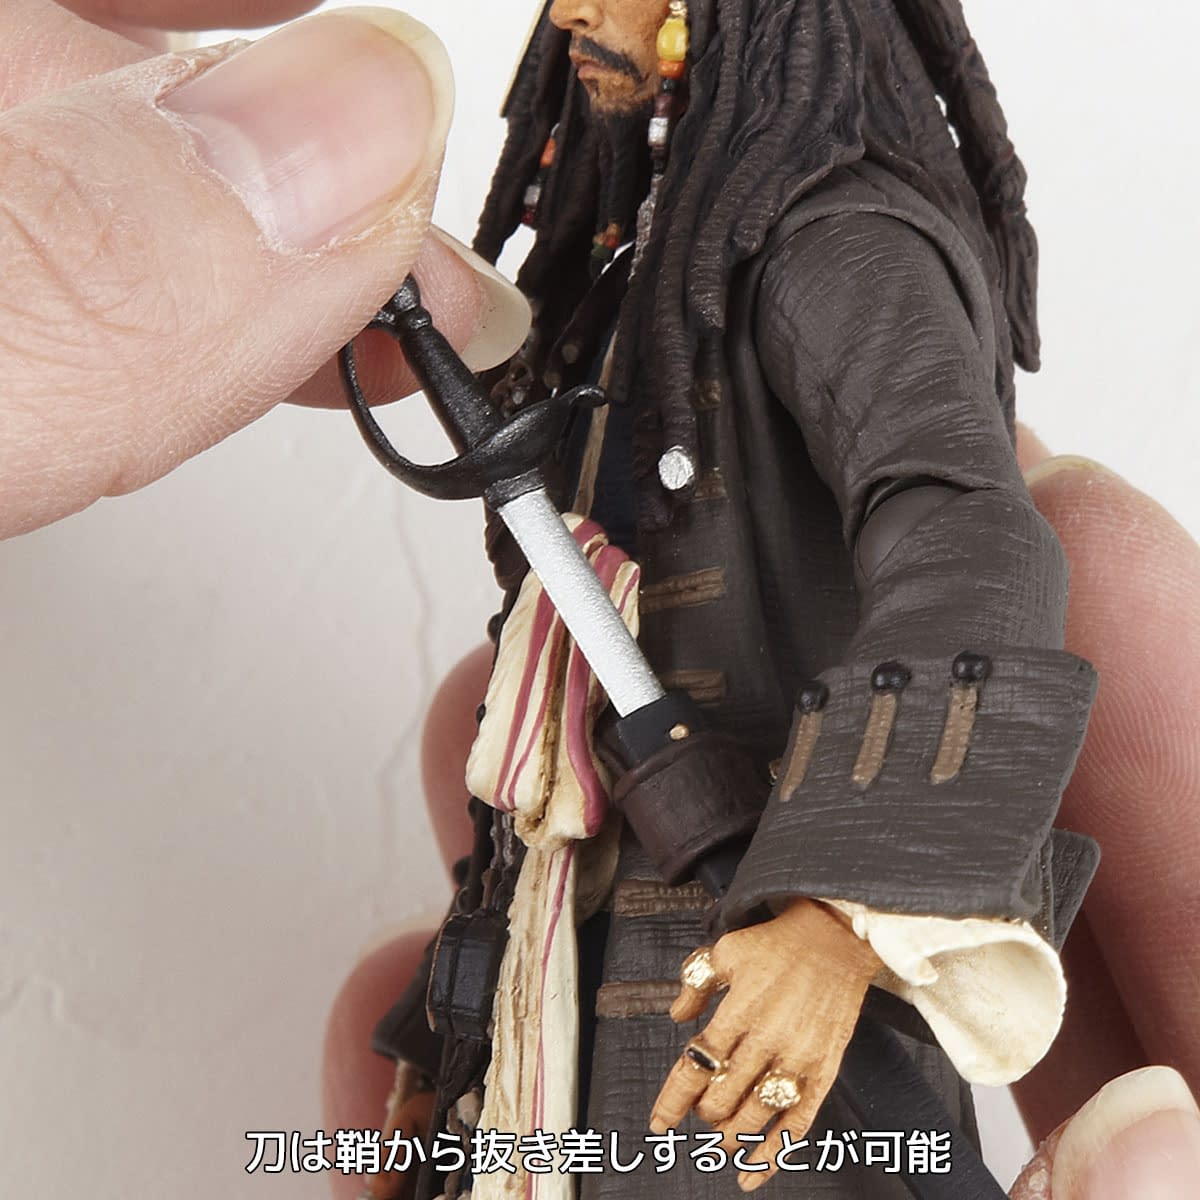 Captain Jack Sparrow is Back with Kaiyodo's Revoltech Figure Line